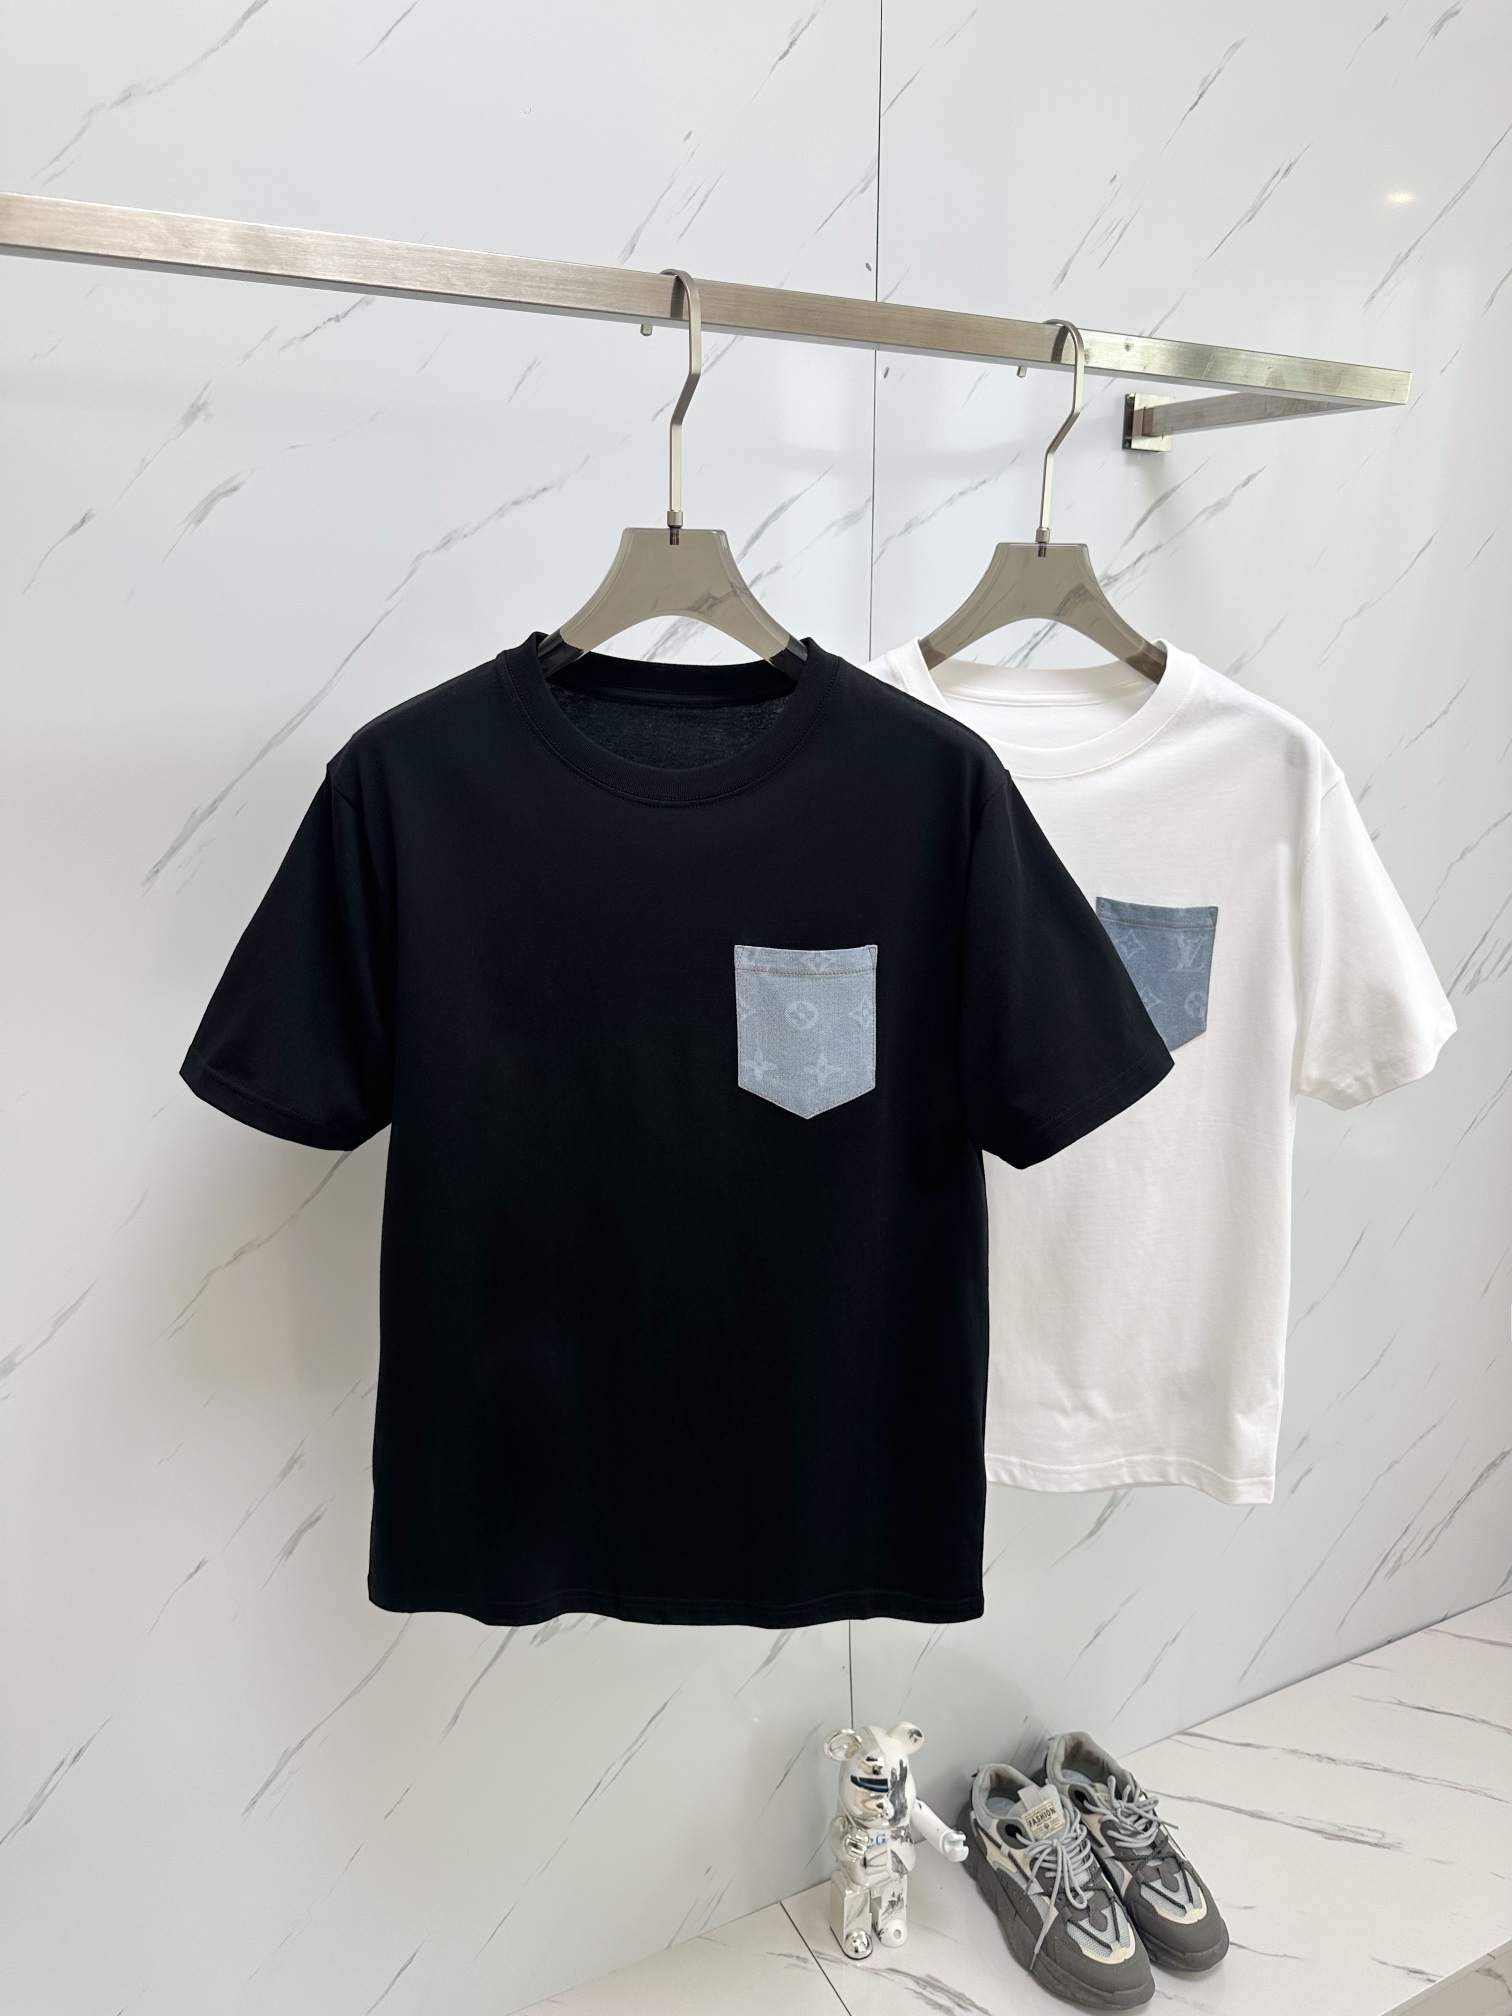 Louis Vuitton Clothing T-Shirt Black White Unisex Cotton Short Sleeve